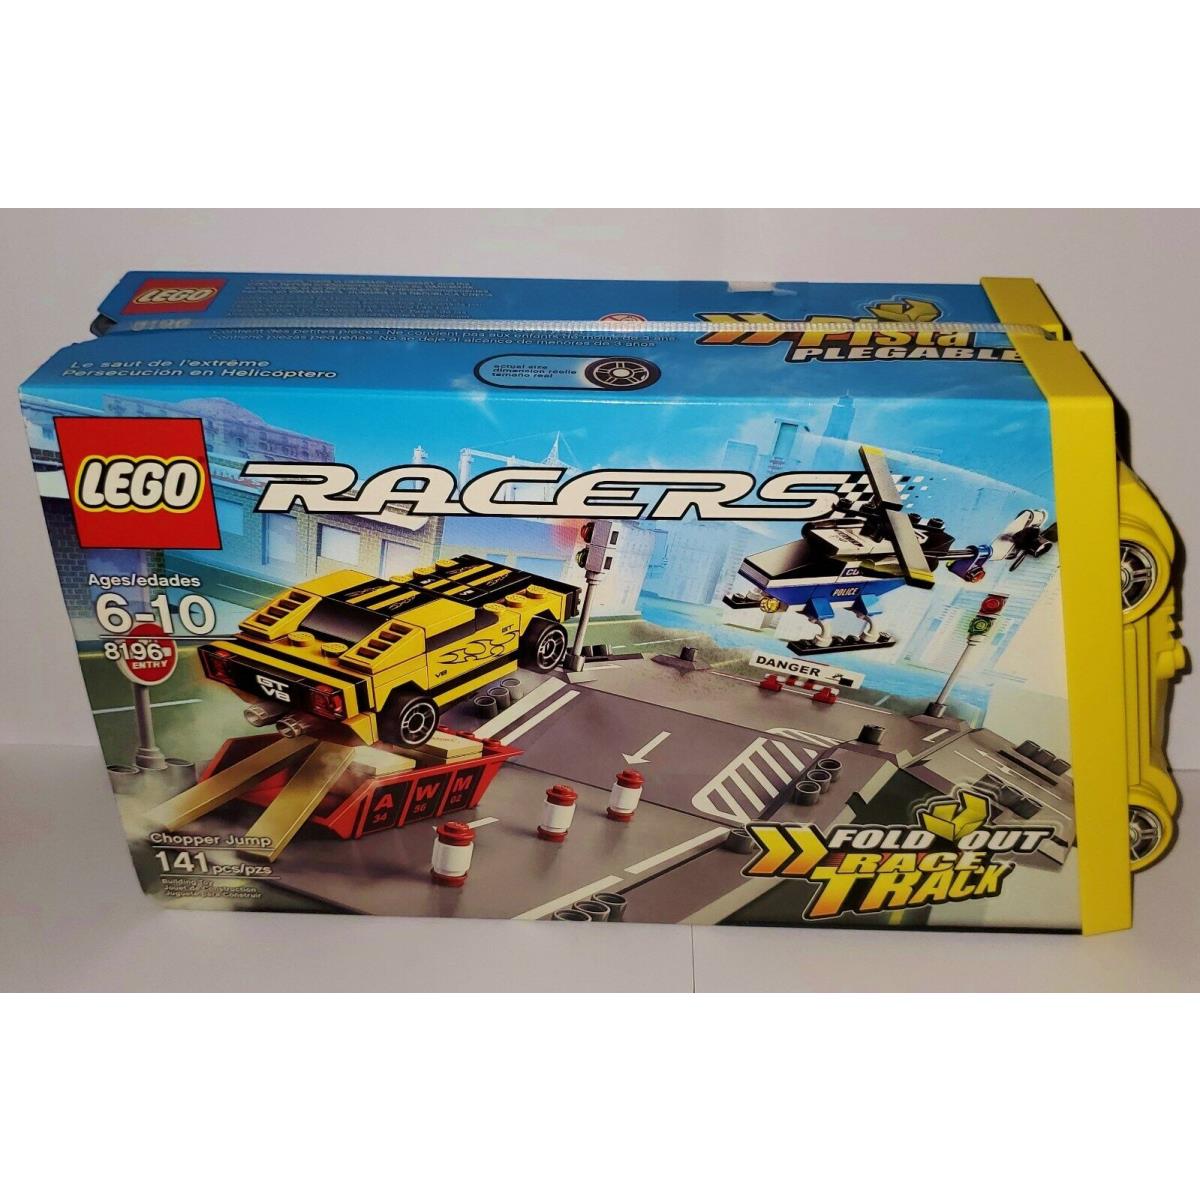 Lego World Racers Racing Set 8196 Chopper Jump w/ Fold Out Race Track Htf